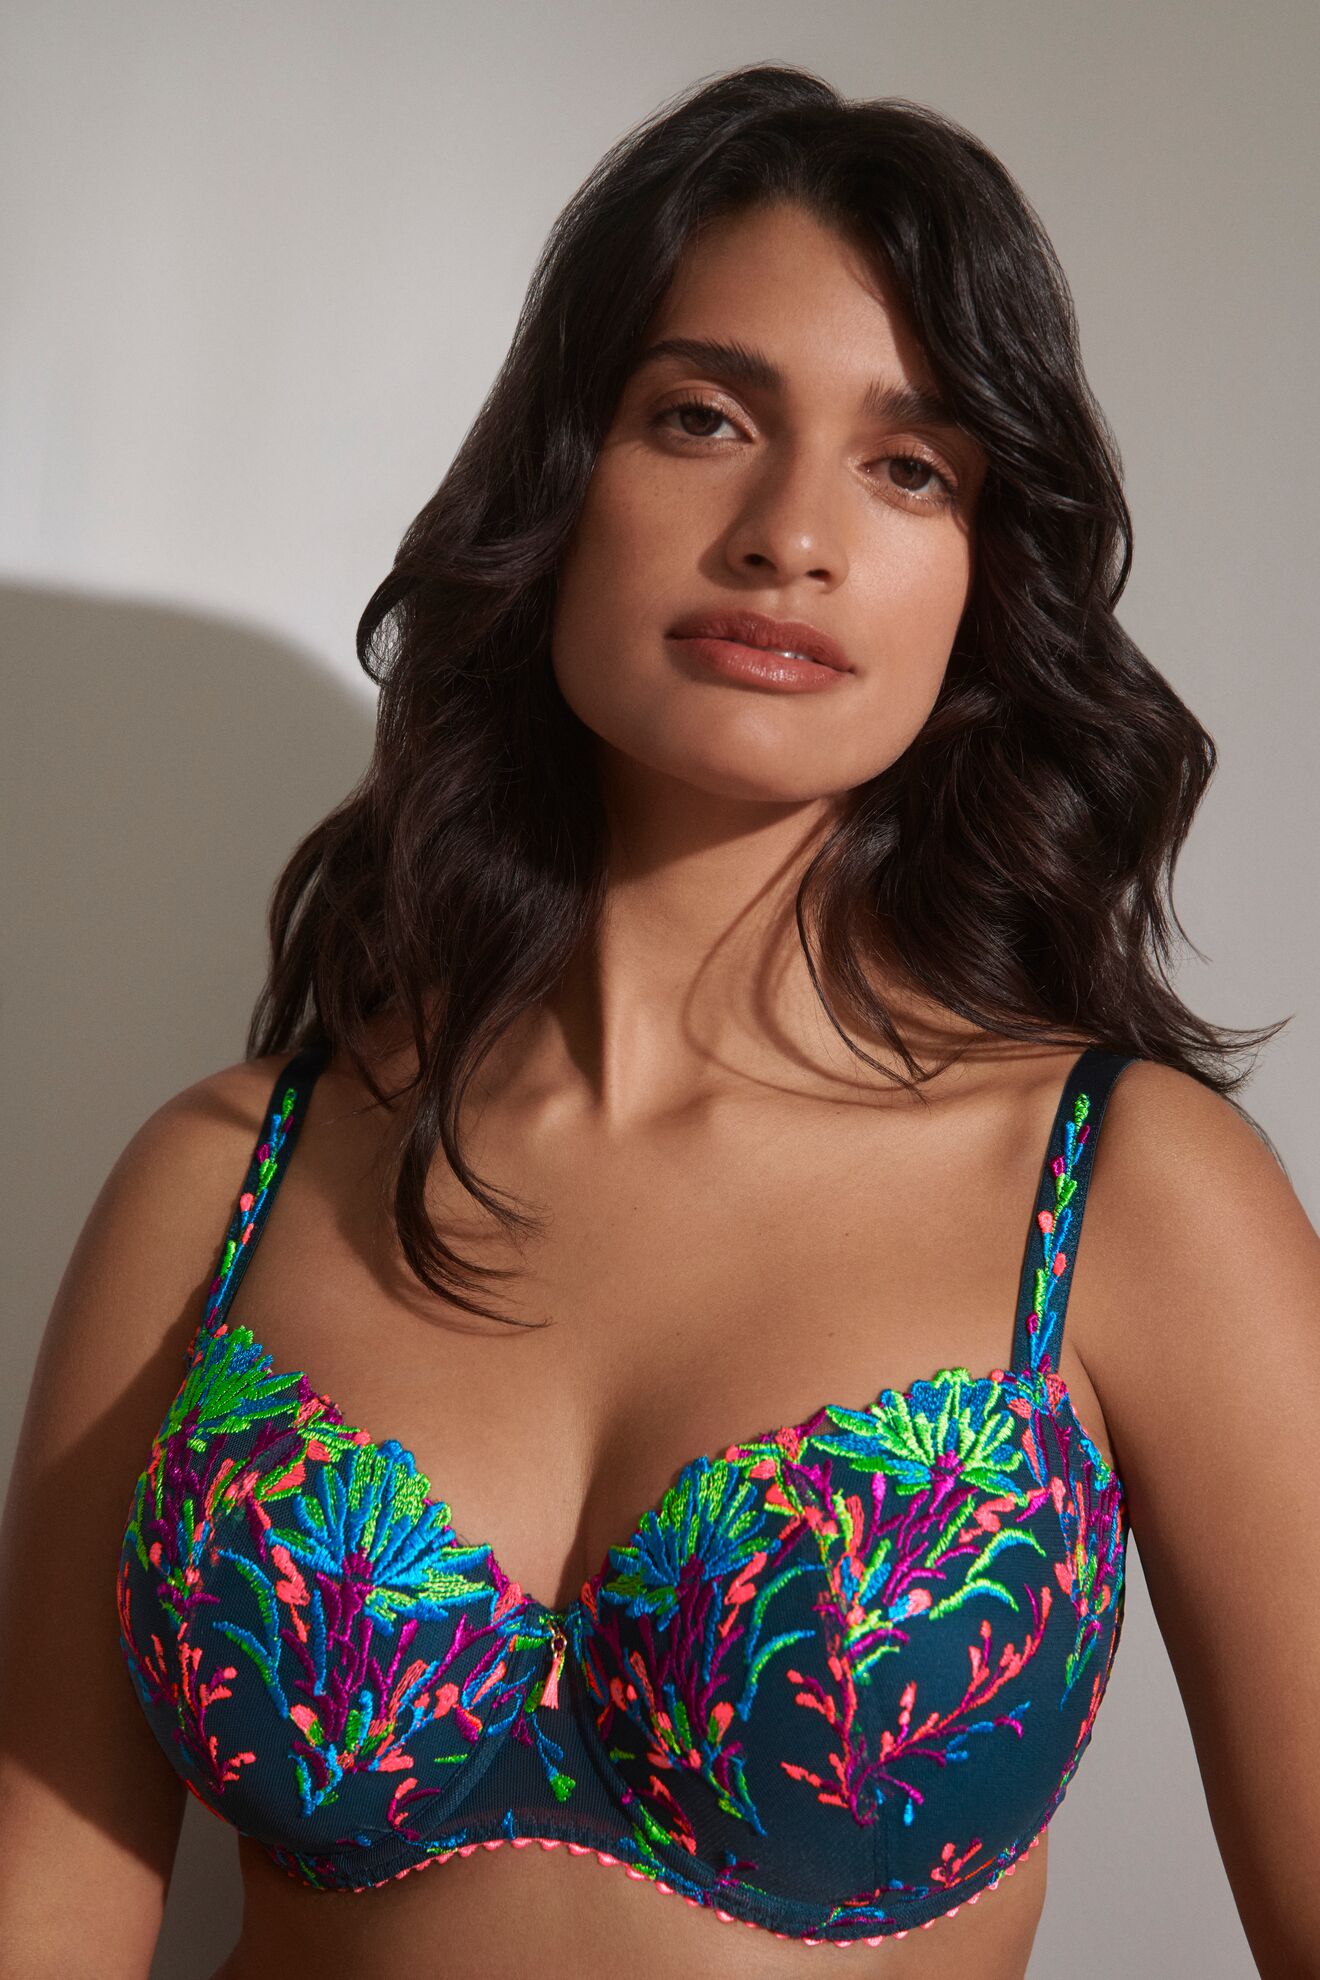 Jungle Summer bikini bra - with underwire that provides great